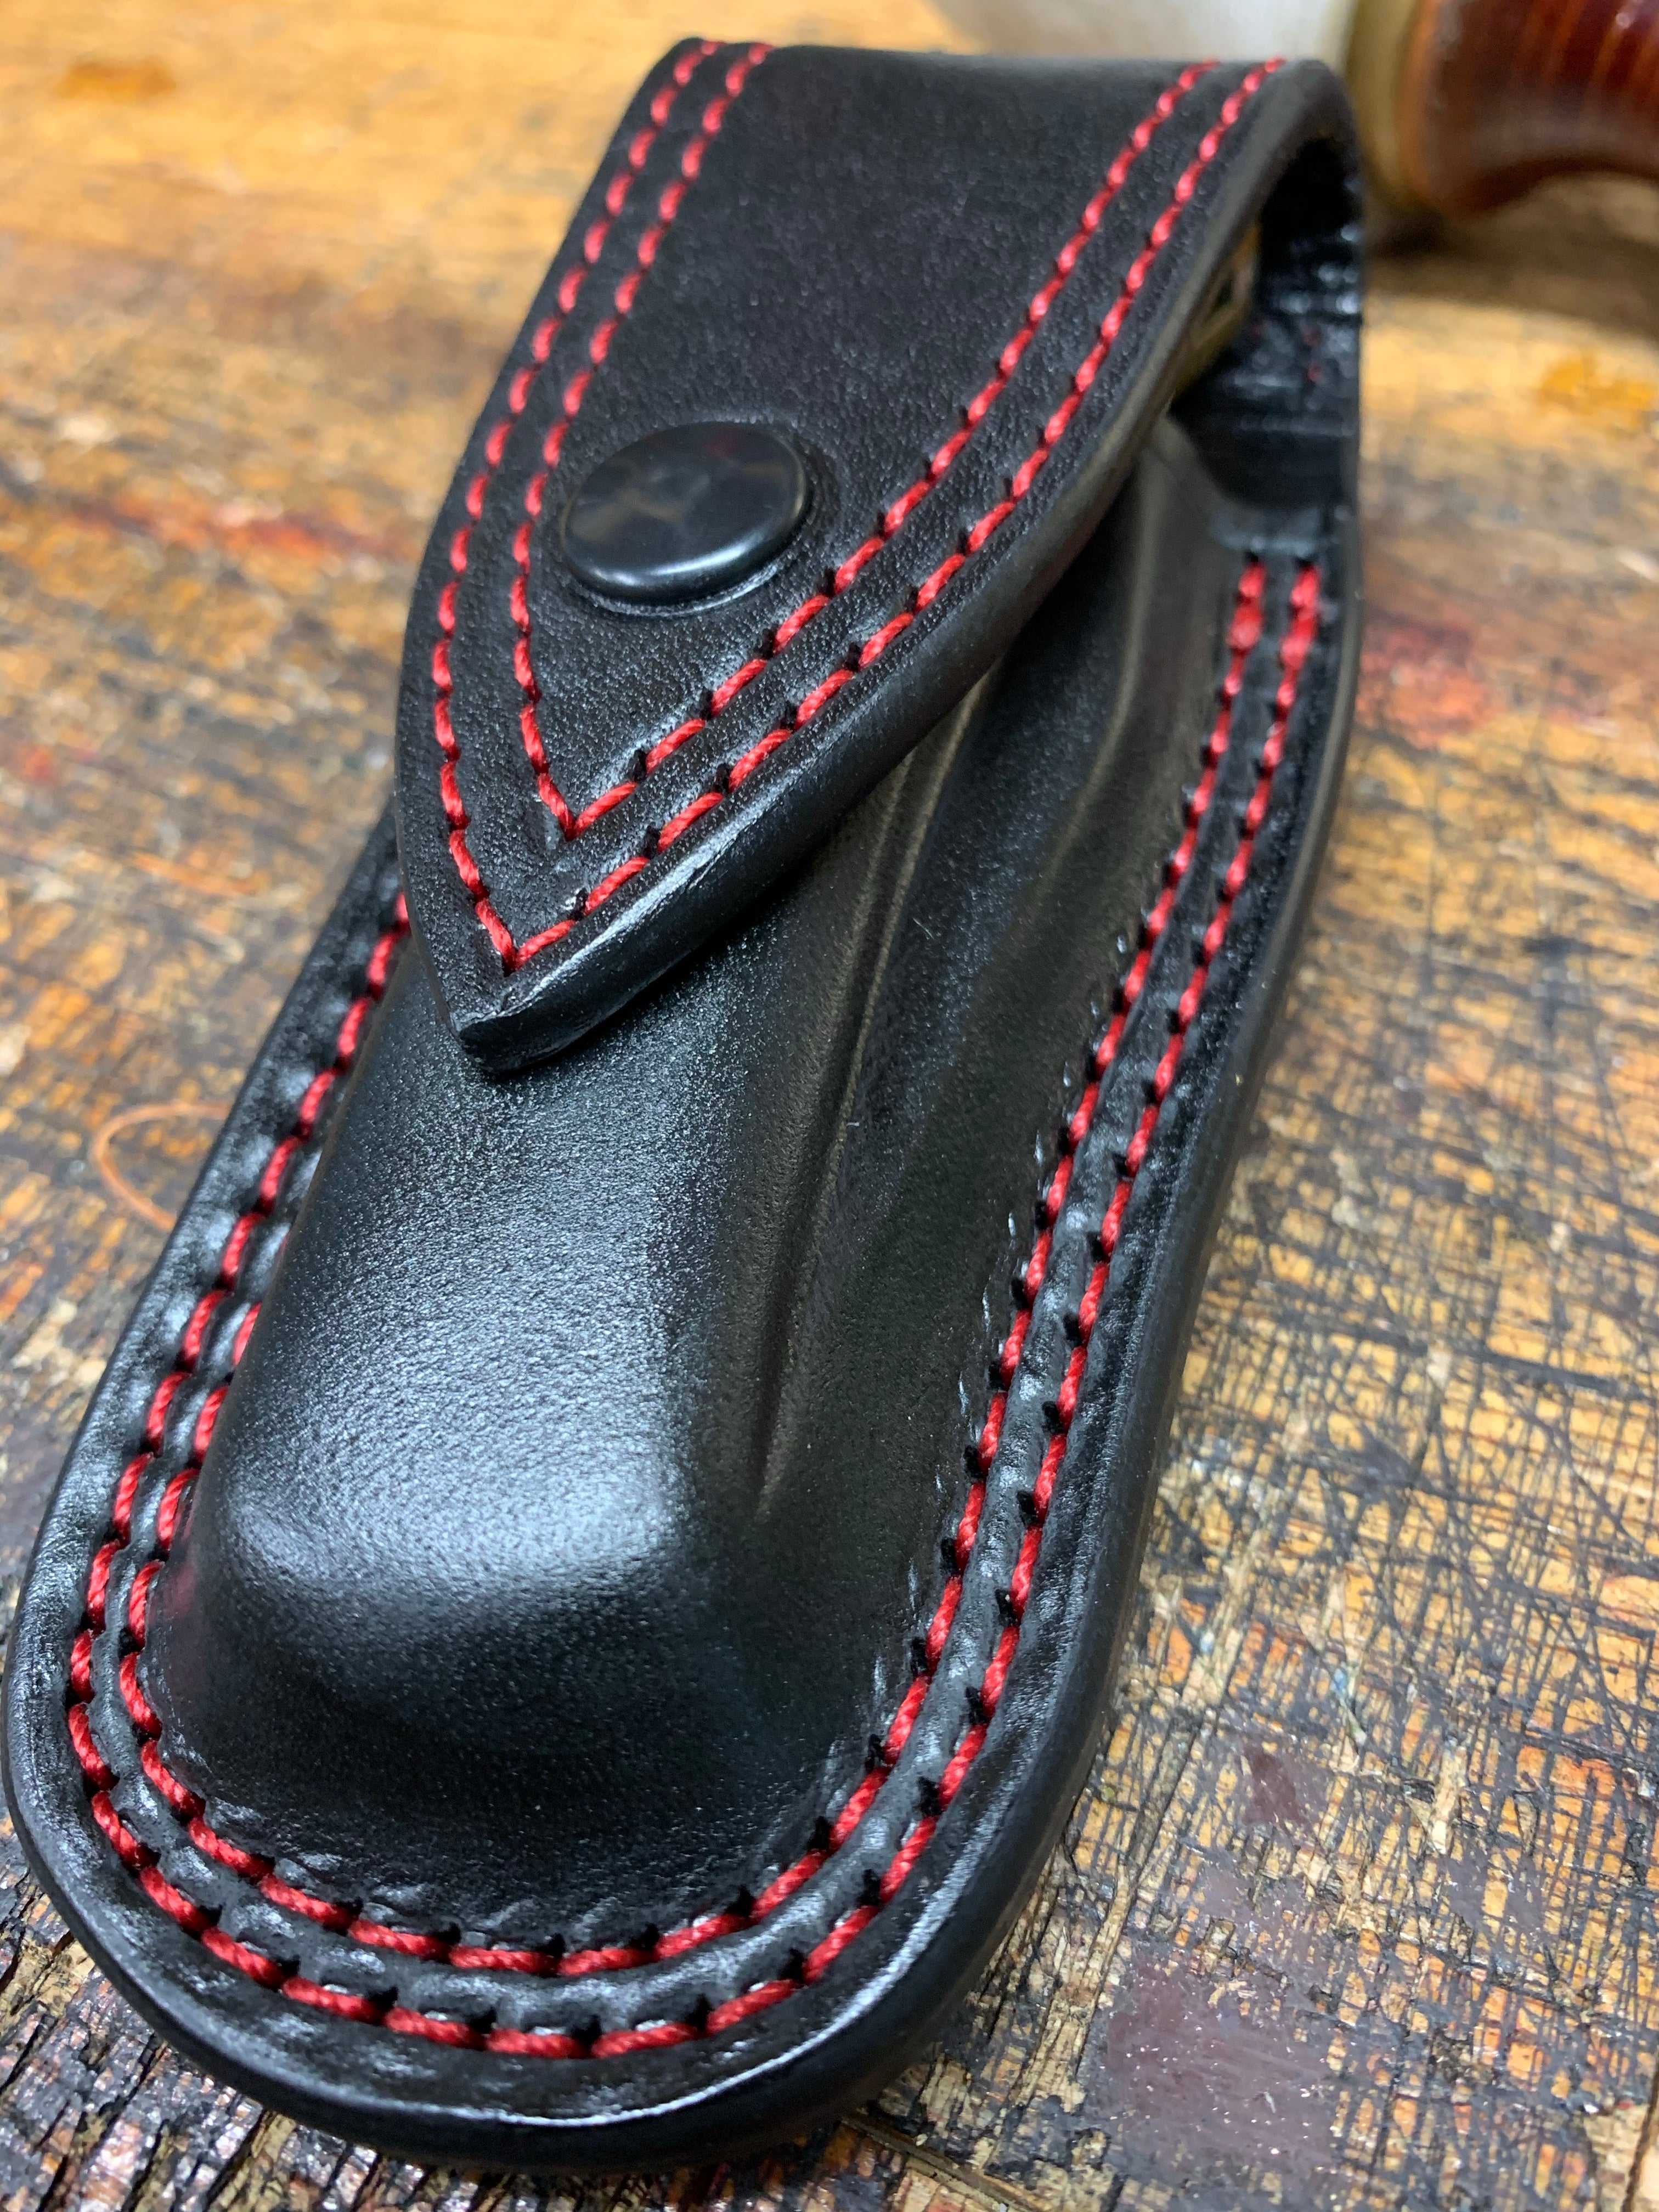 Sheath --- Leather - Natural - (6.5 x 1.5 blades)